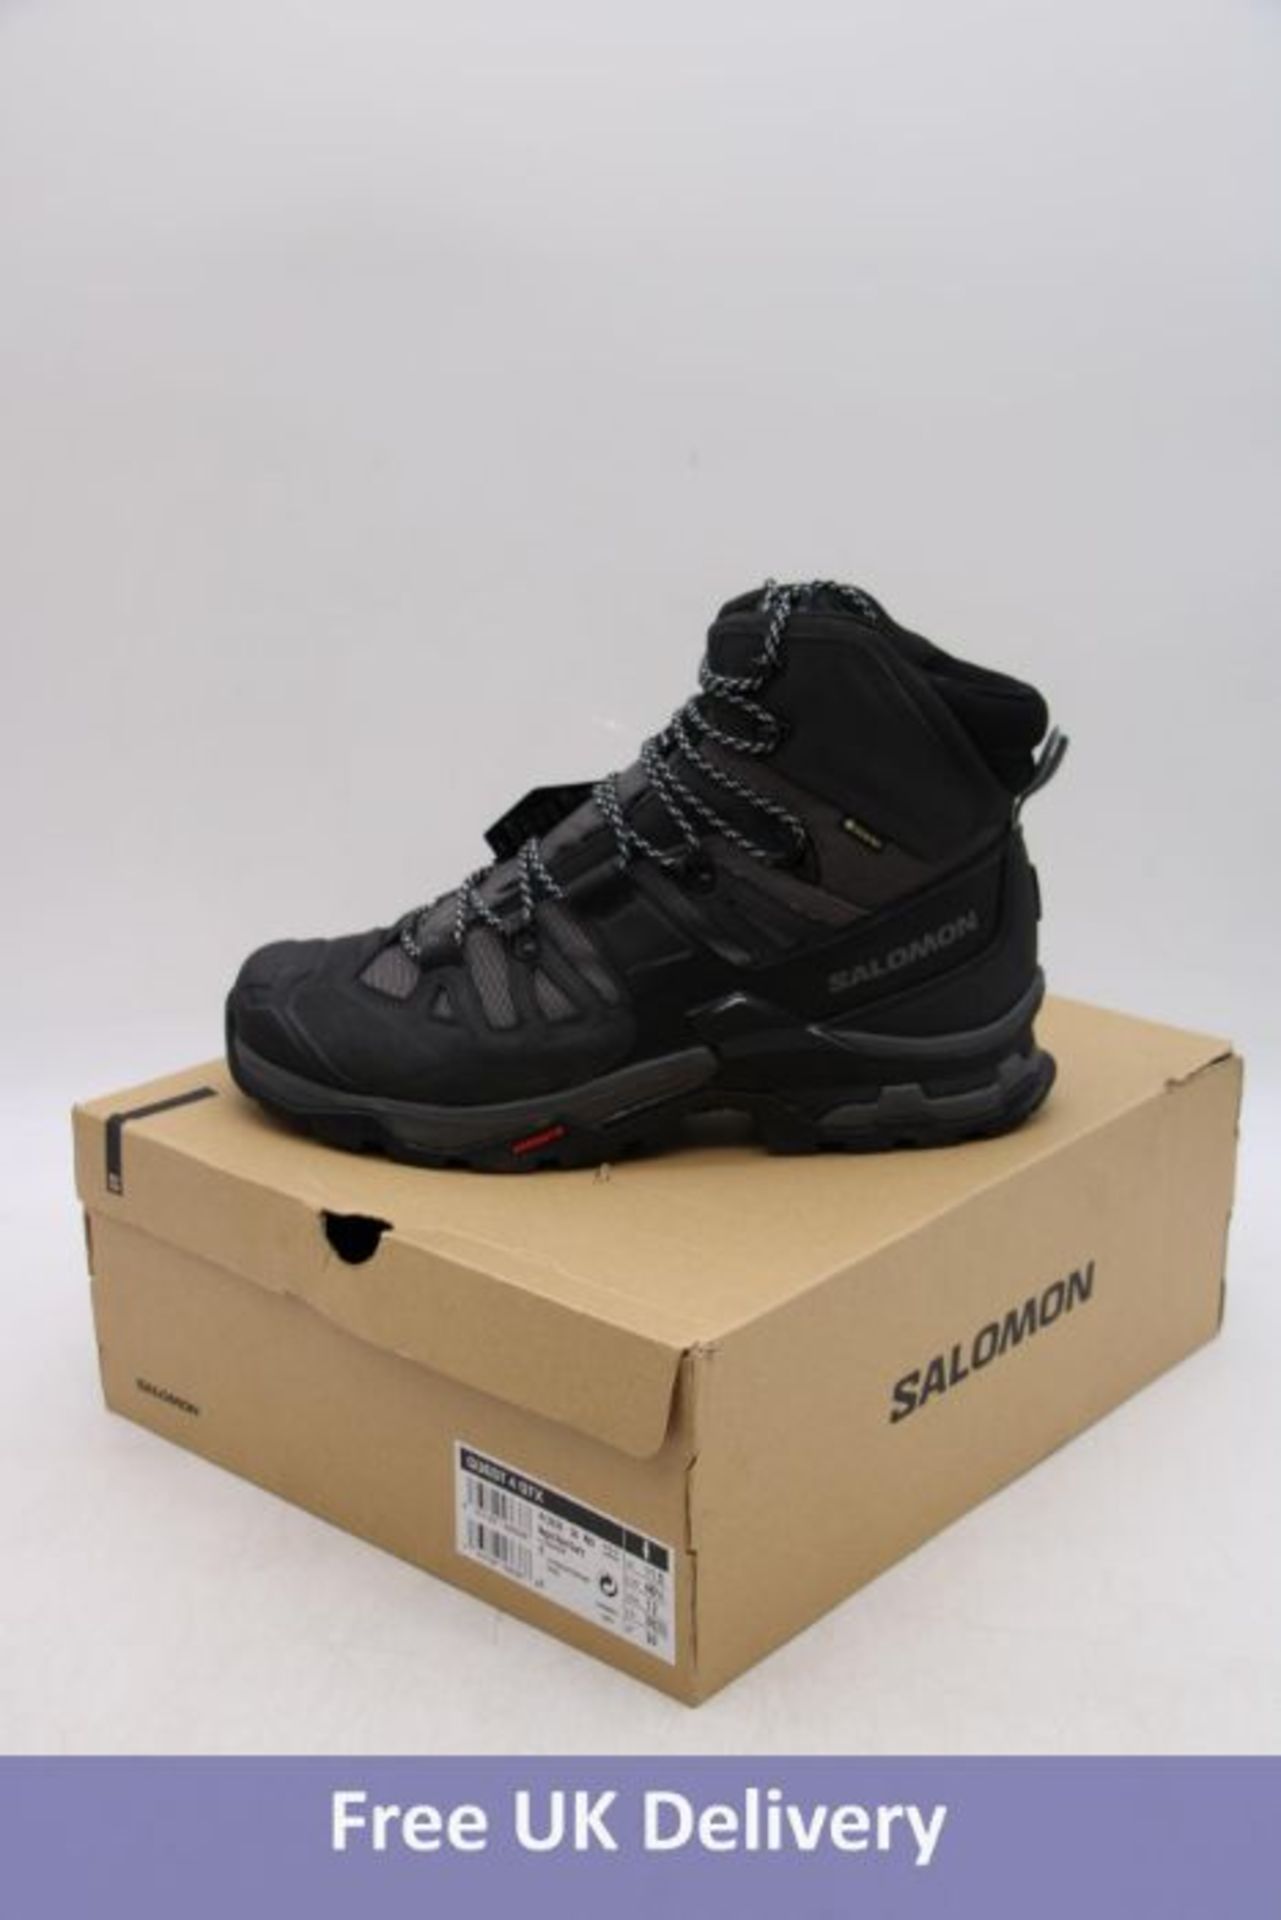 Salomon Men's Quest 4 GTX Hiking Boots, Black, UK 11.5. Box damaged